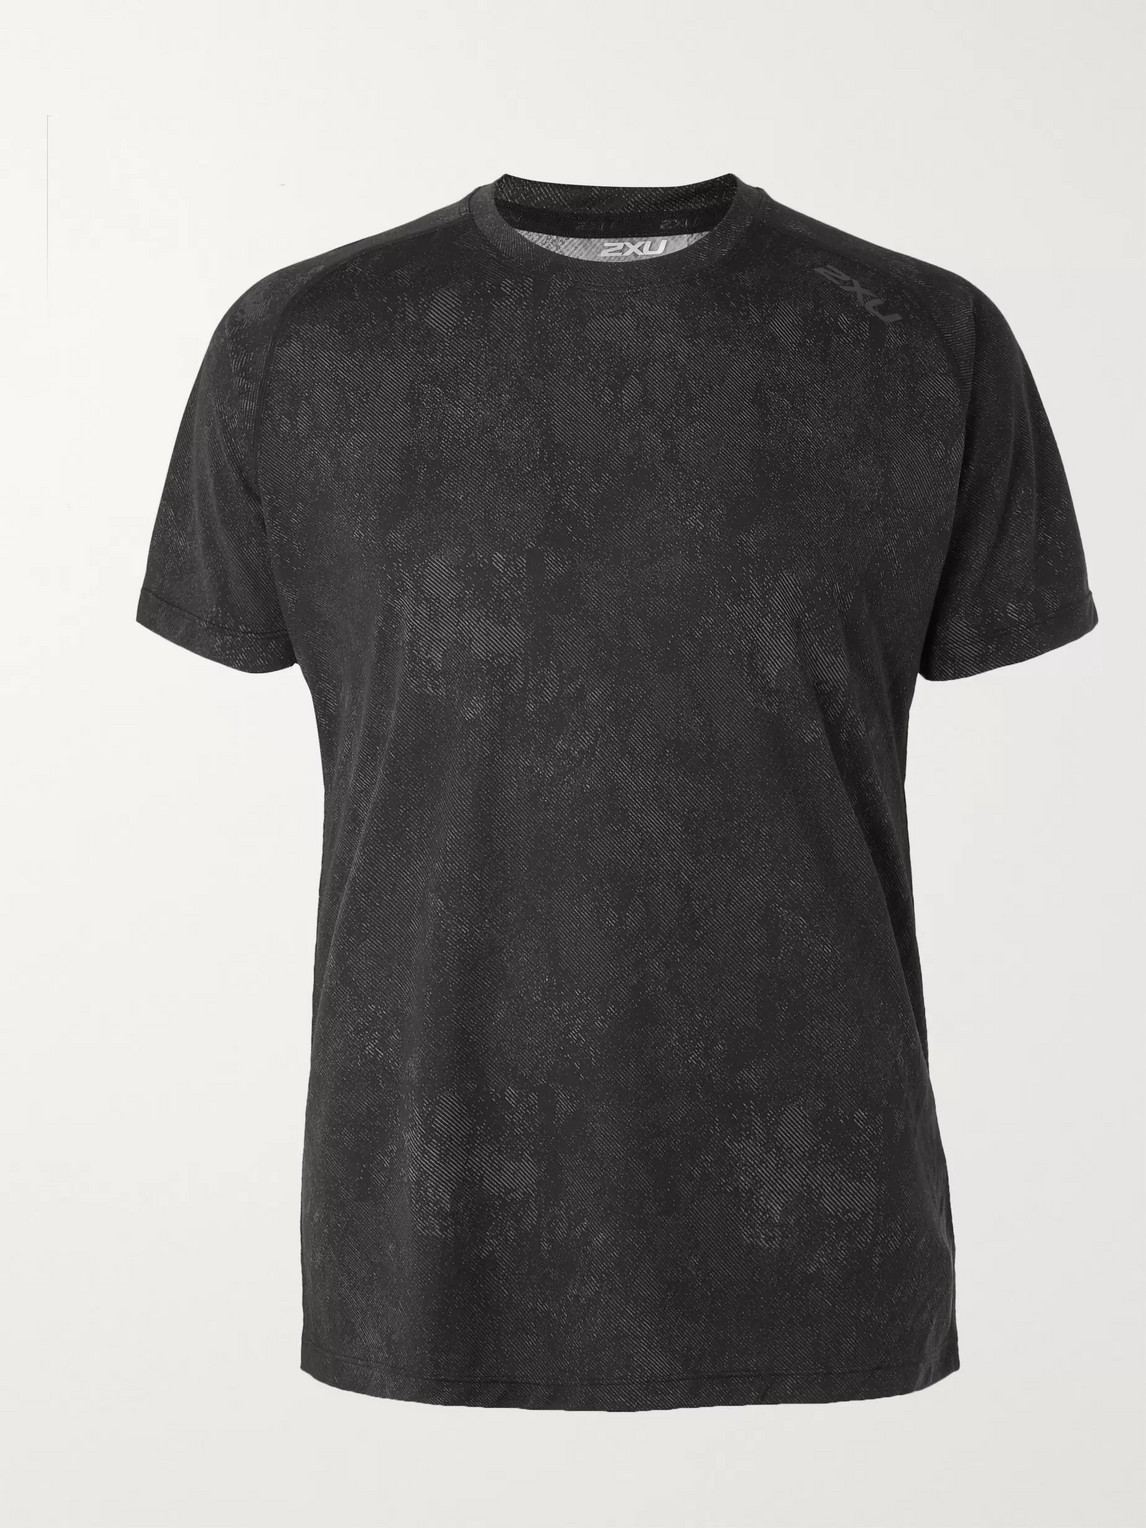 2xu Ghst Stretch-jersey T-shirt In Black